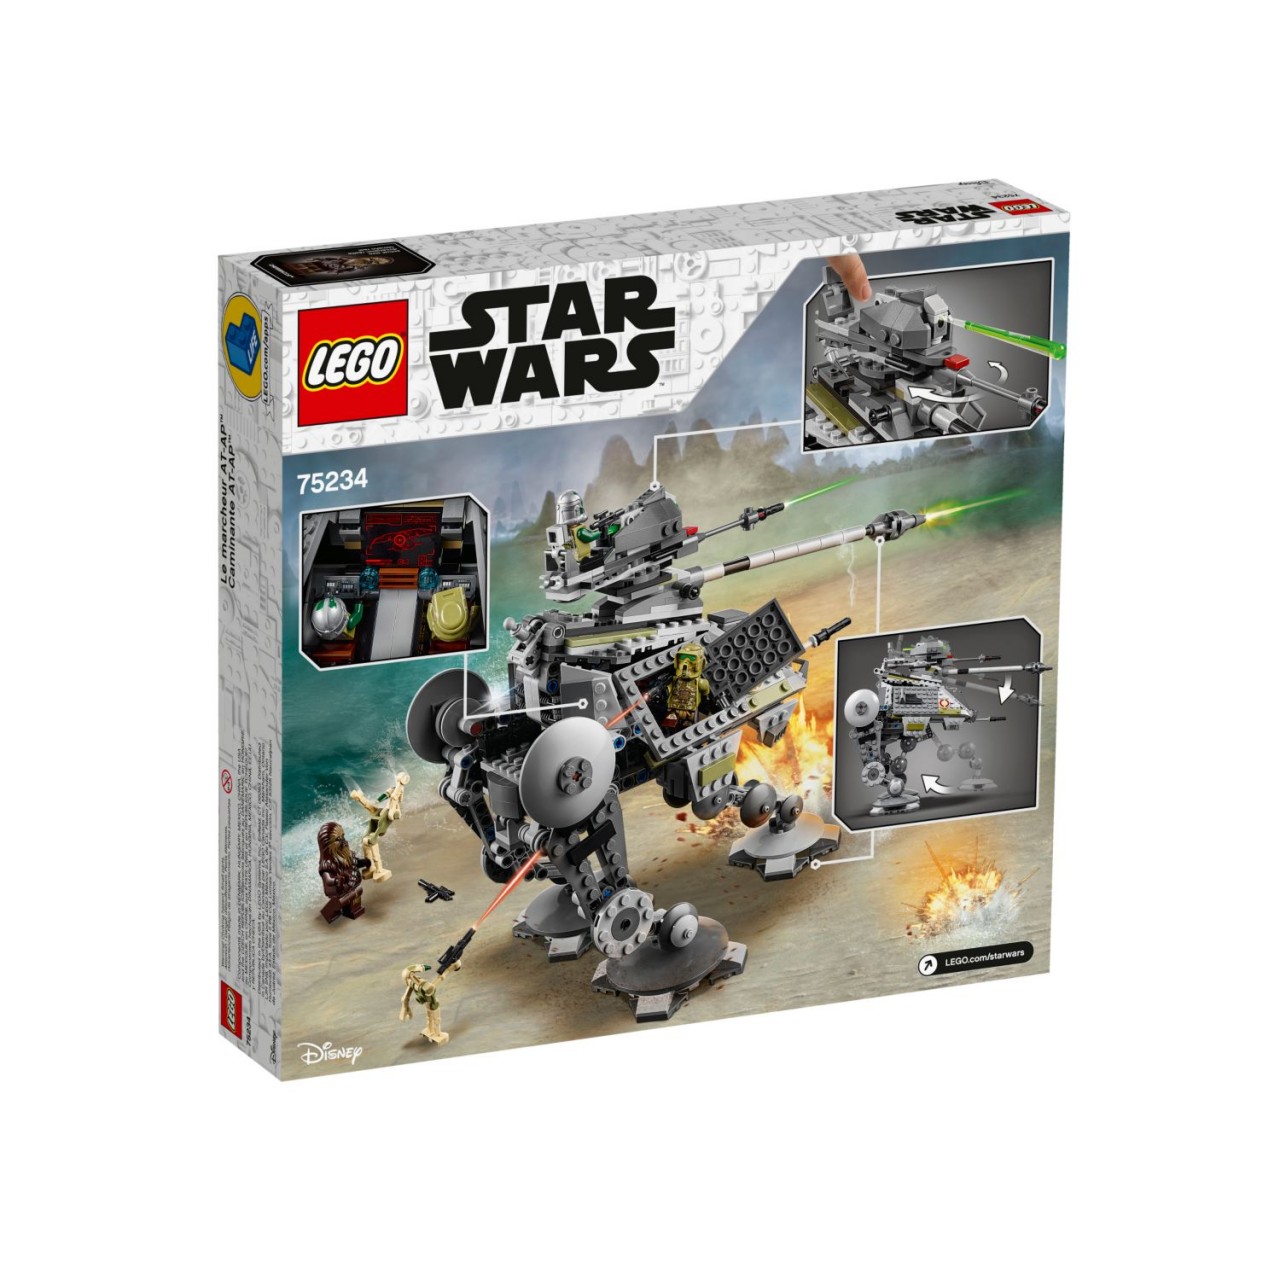 LEGO STAR WARS 75234 AT-AP Walker